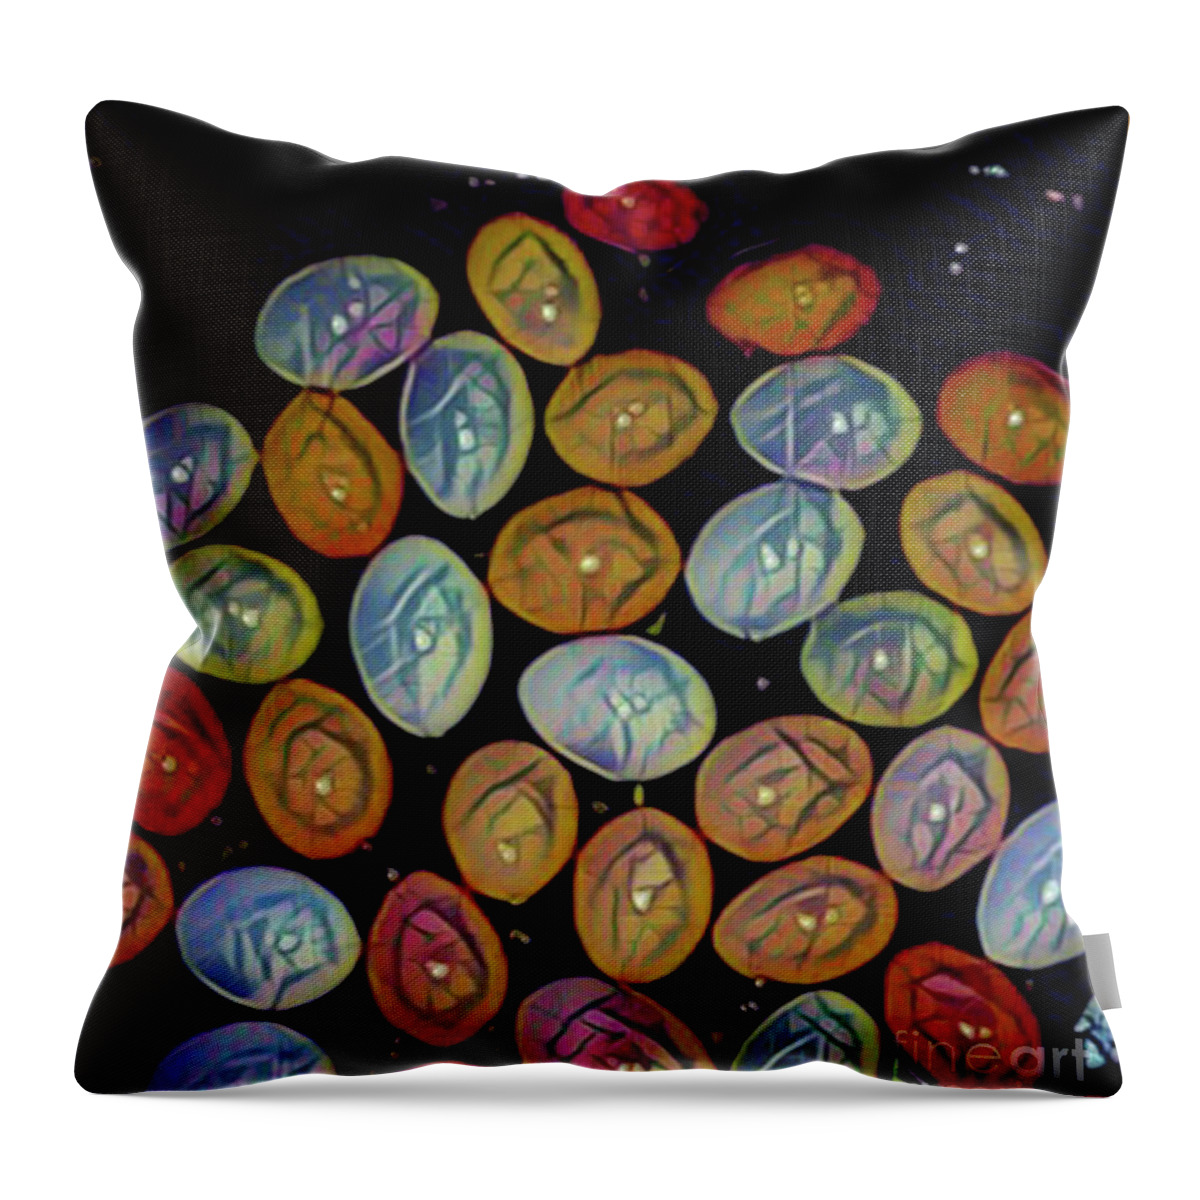 Eggs Throw Pillow featuring the digital art Happy Eggs by Jackie MacNair